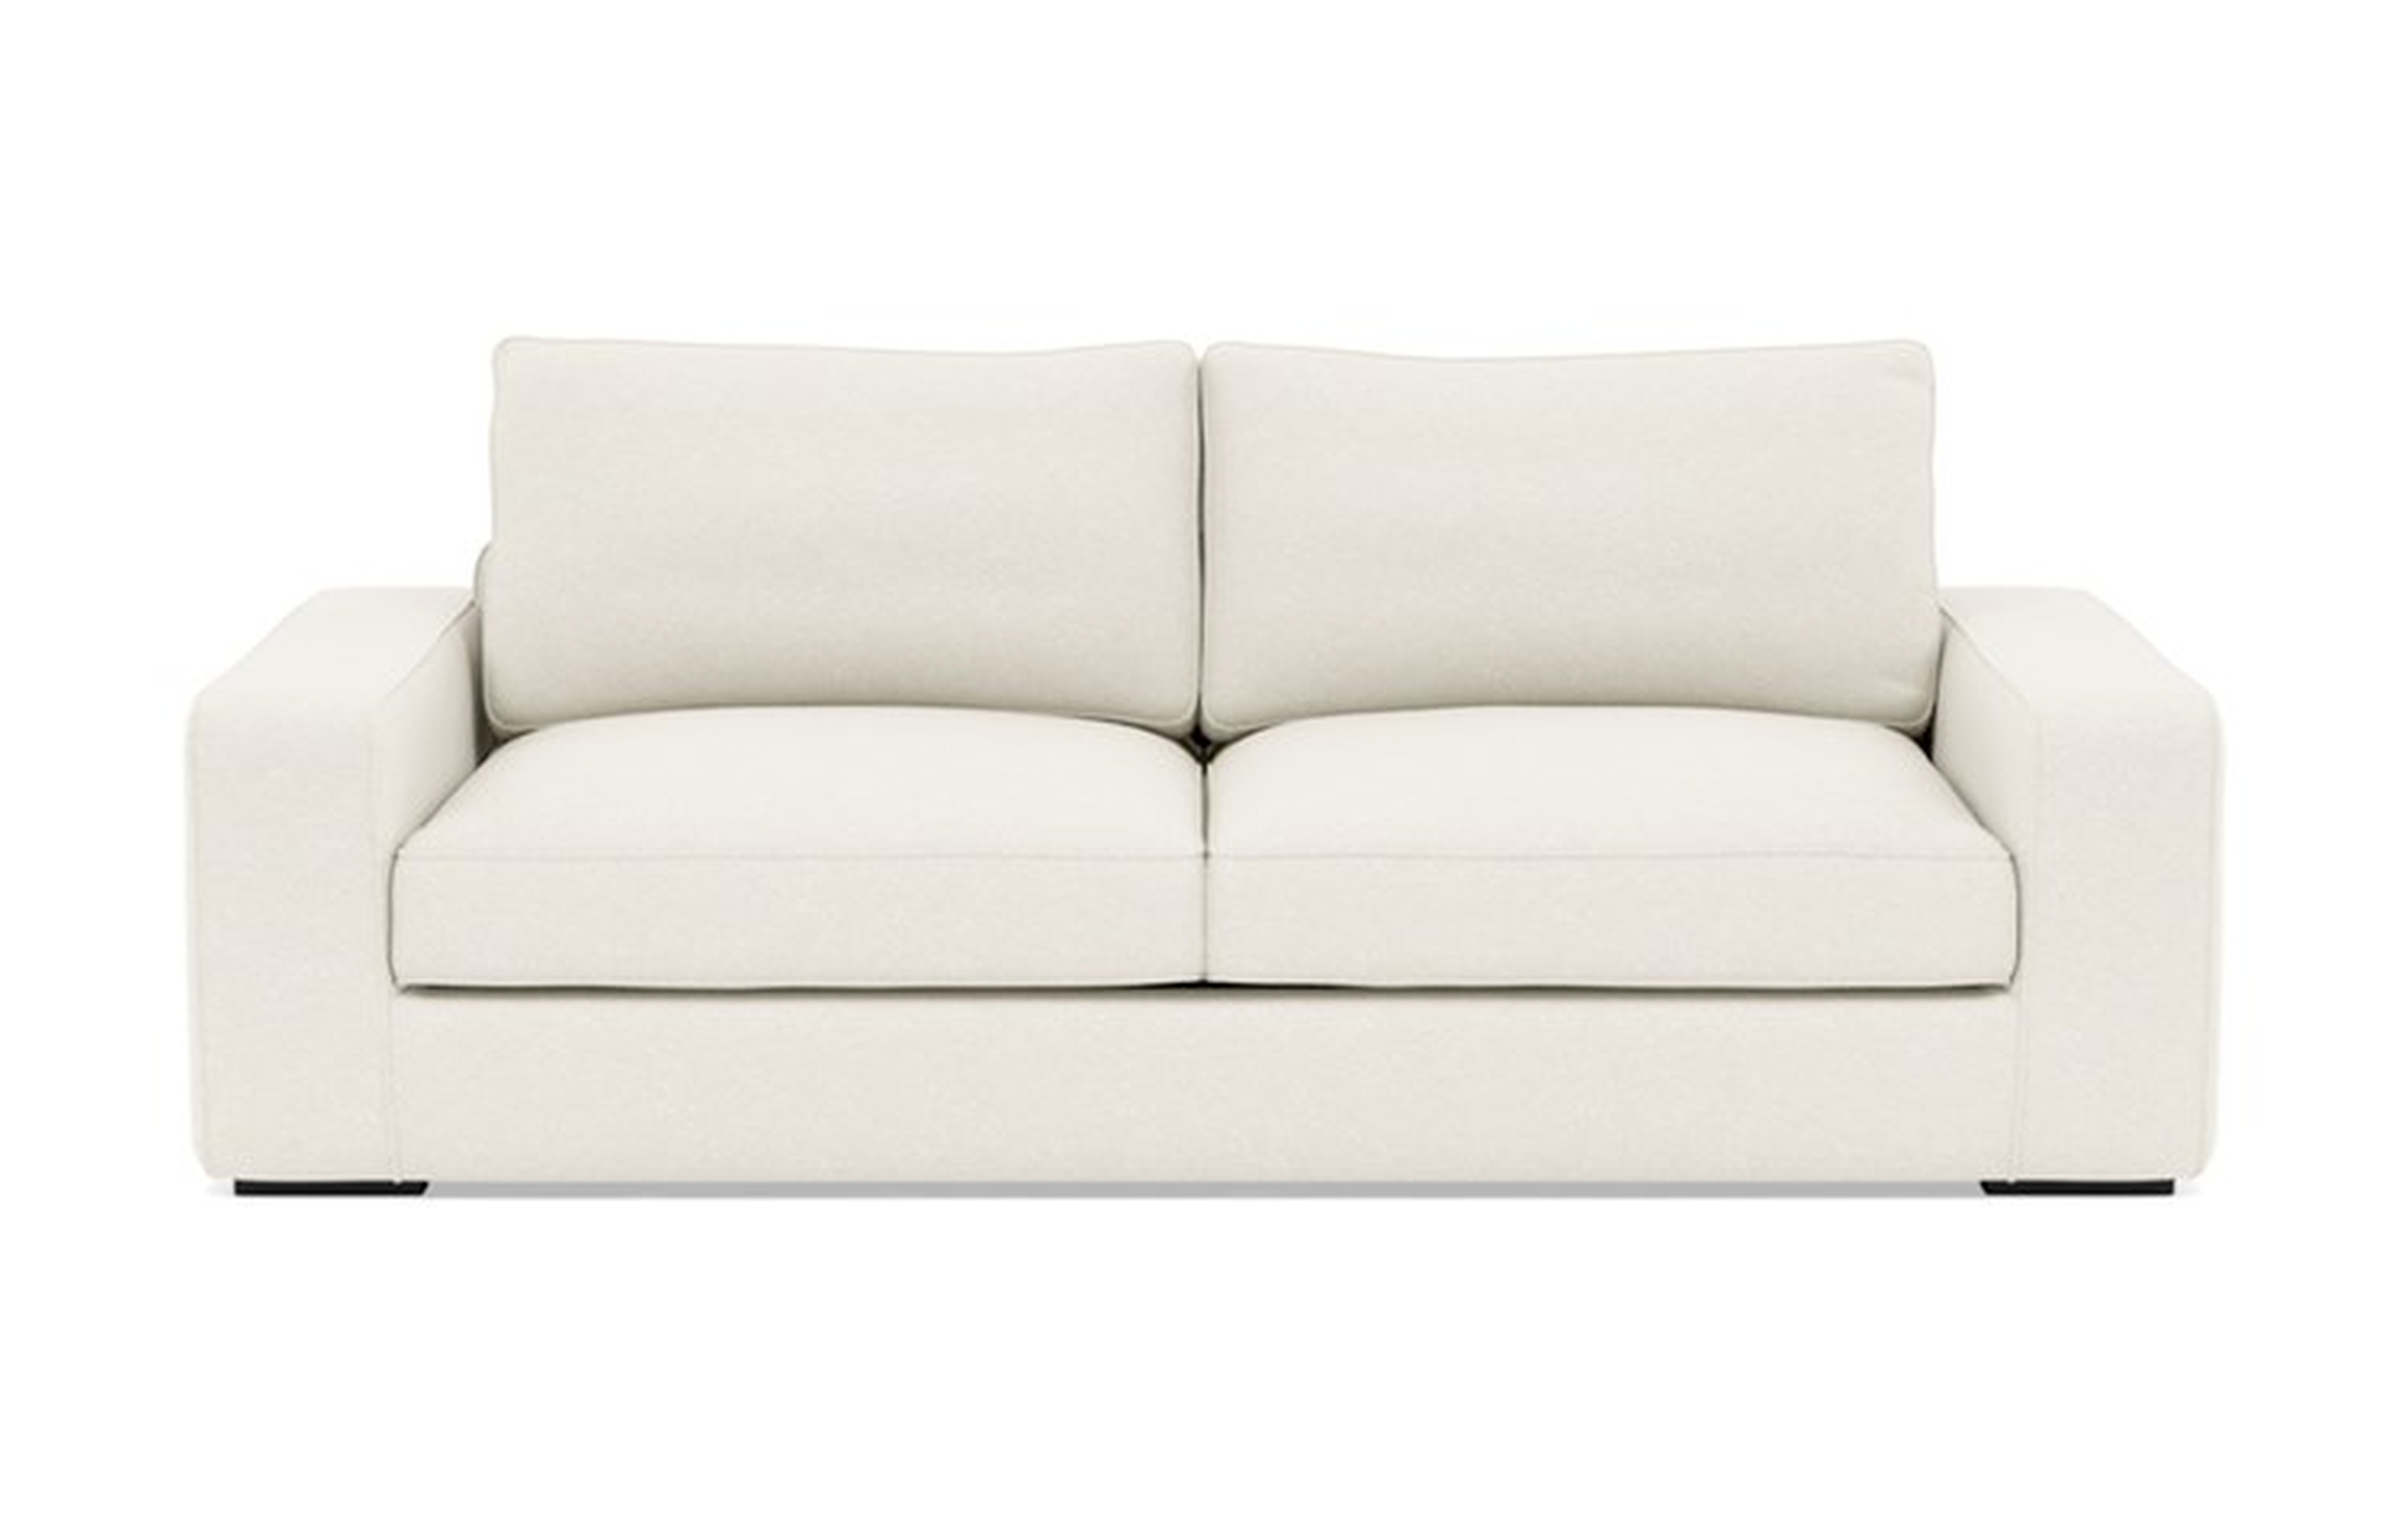 Ainsley Sofa with White Cirrus Fabric, down alt. cushions, and Matte Black legs - Interior Define